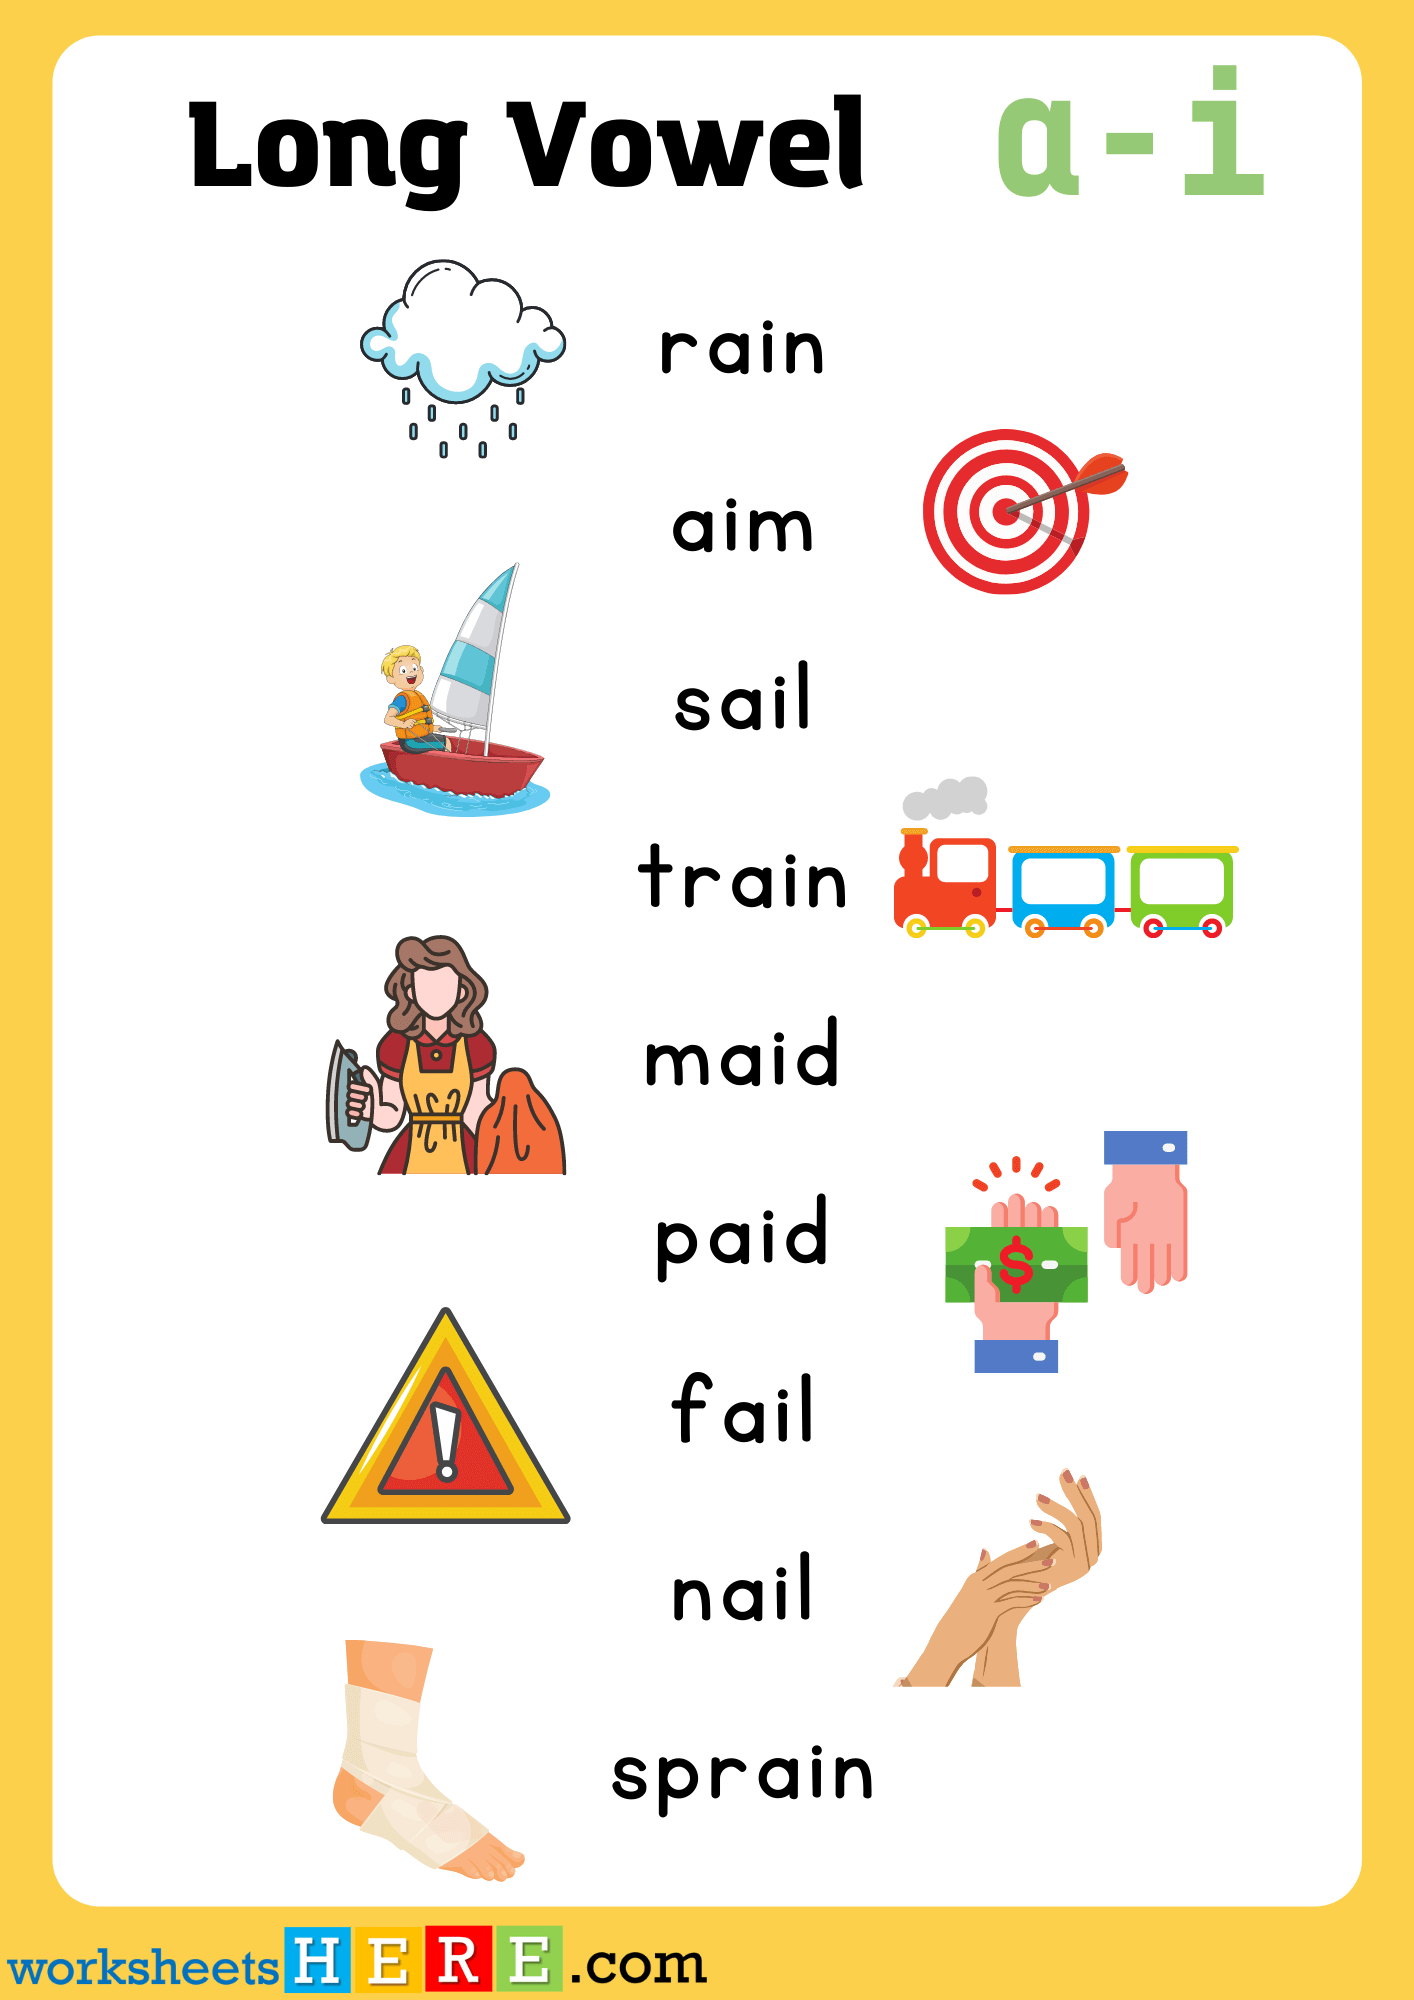 Long Vowel a-i Words List With Pictures, Long Vowel a-i PDF Worksheet For Kids